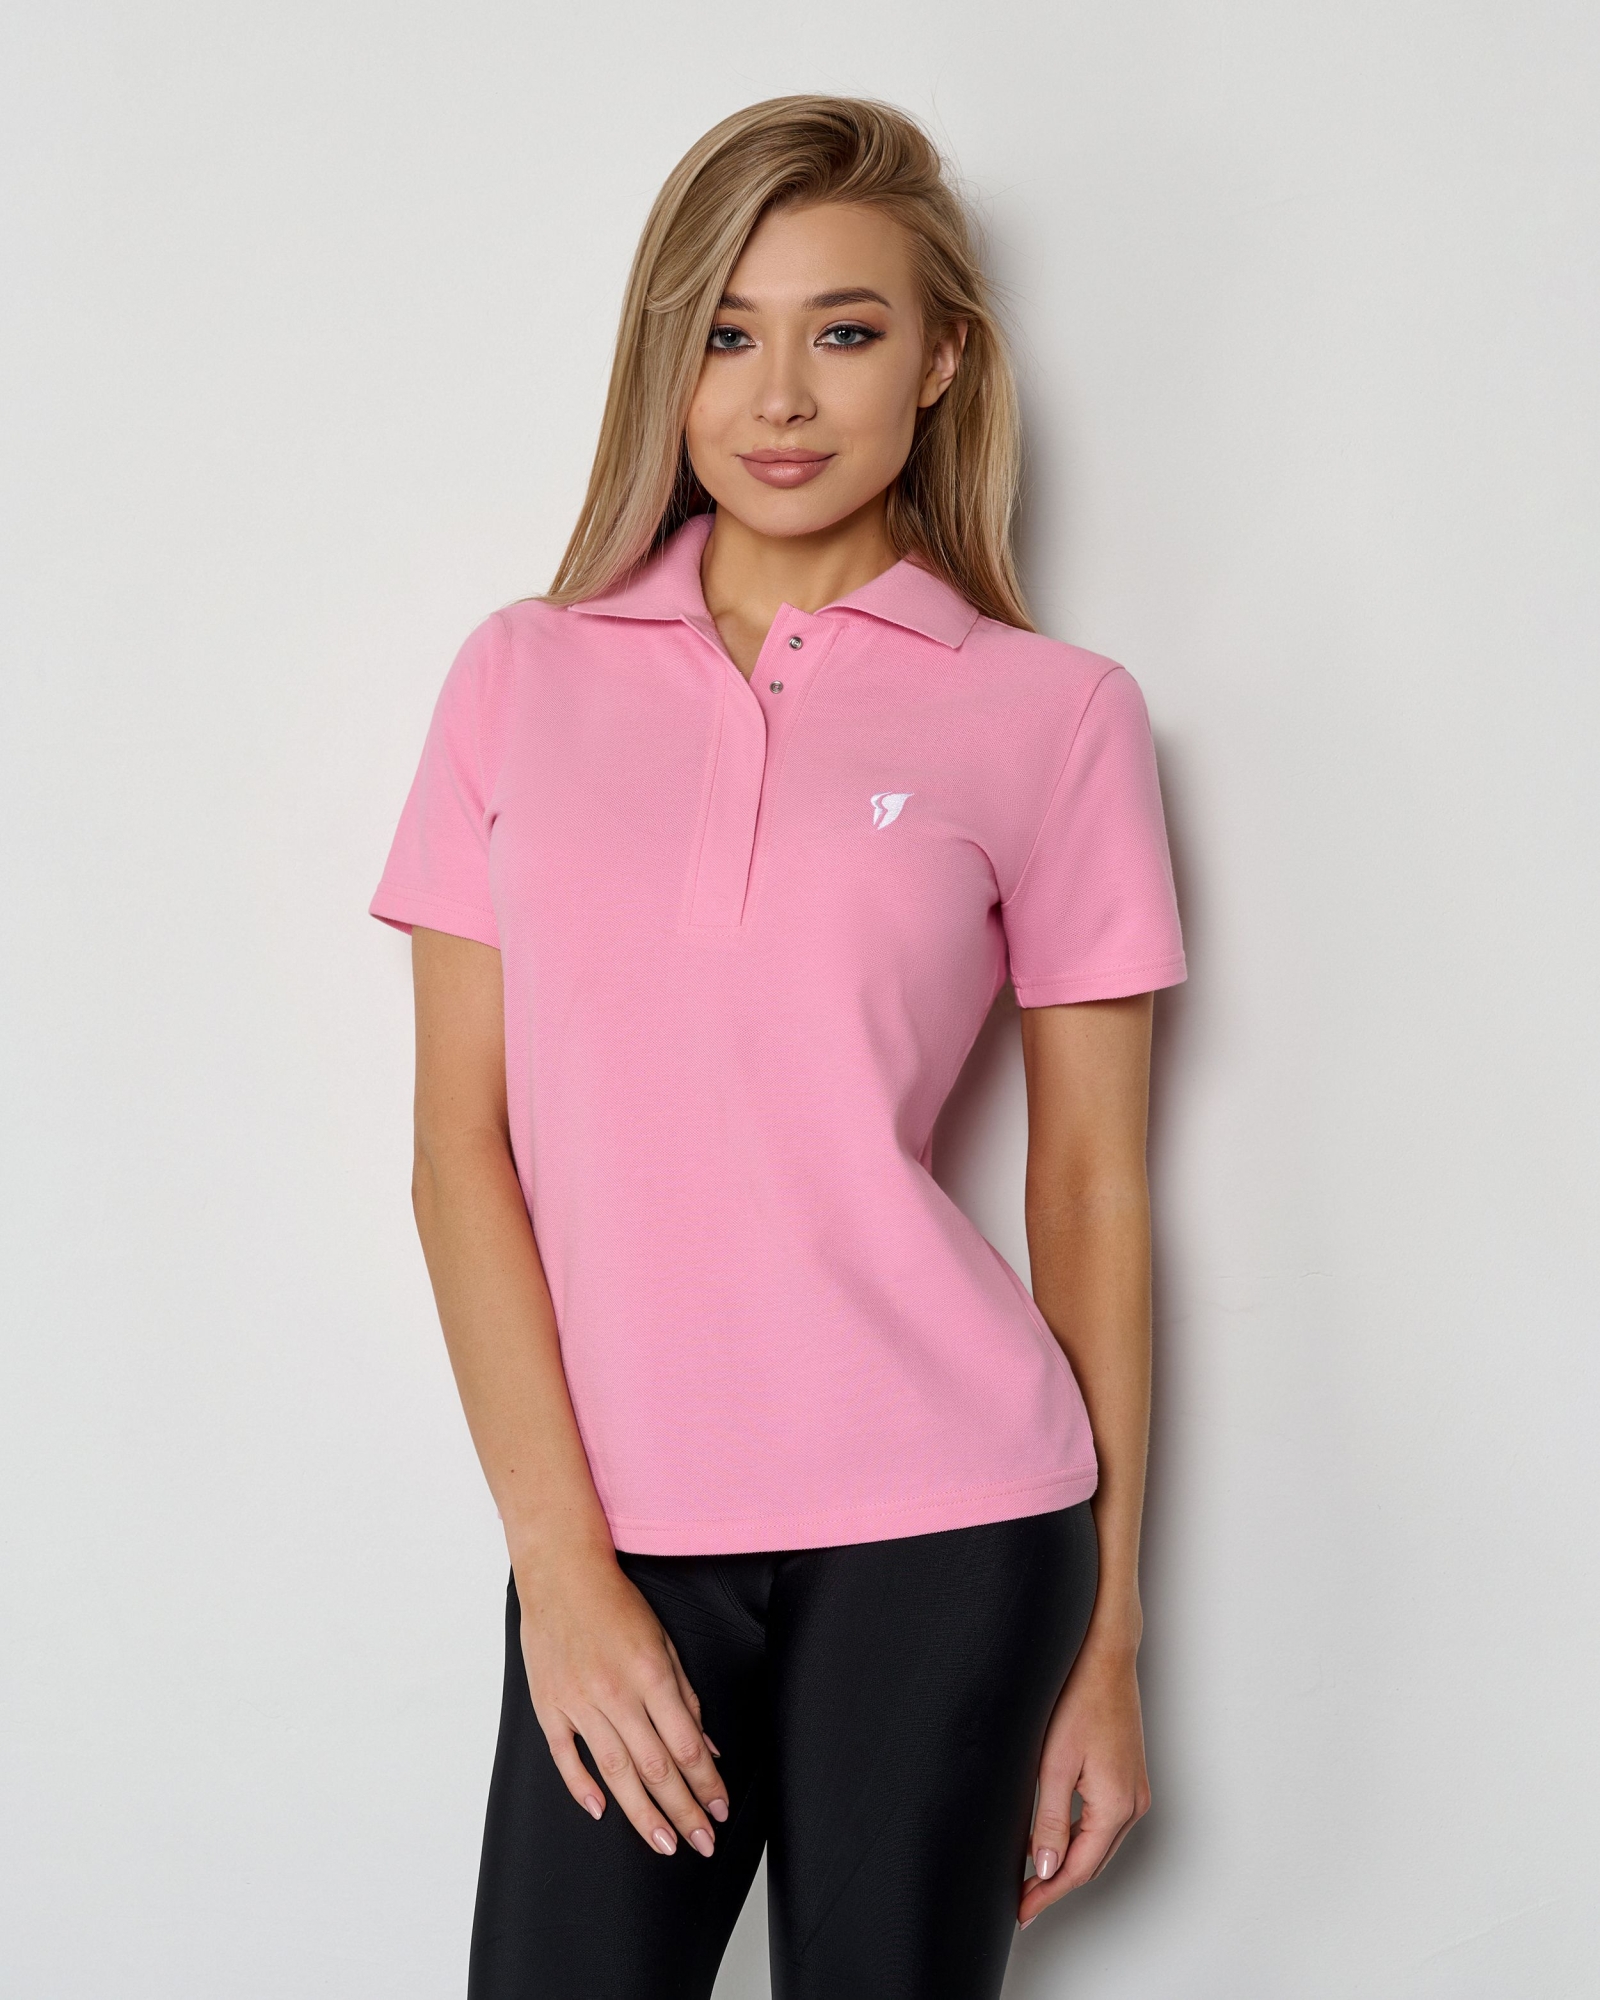 Bona Fide: T-Shirt Polo "Baby Pink" фото 6